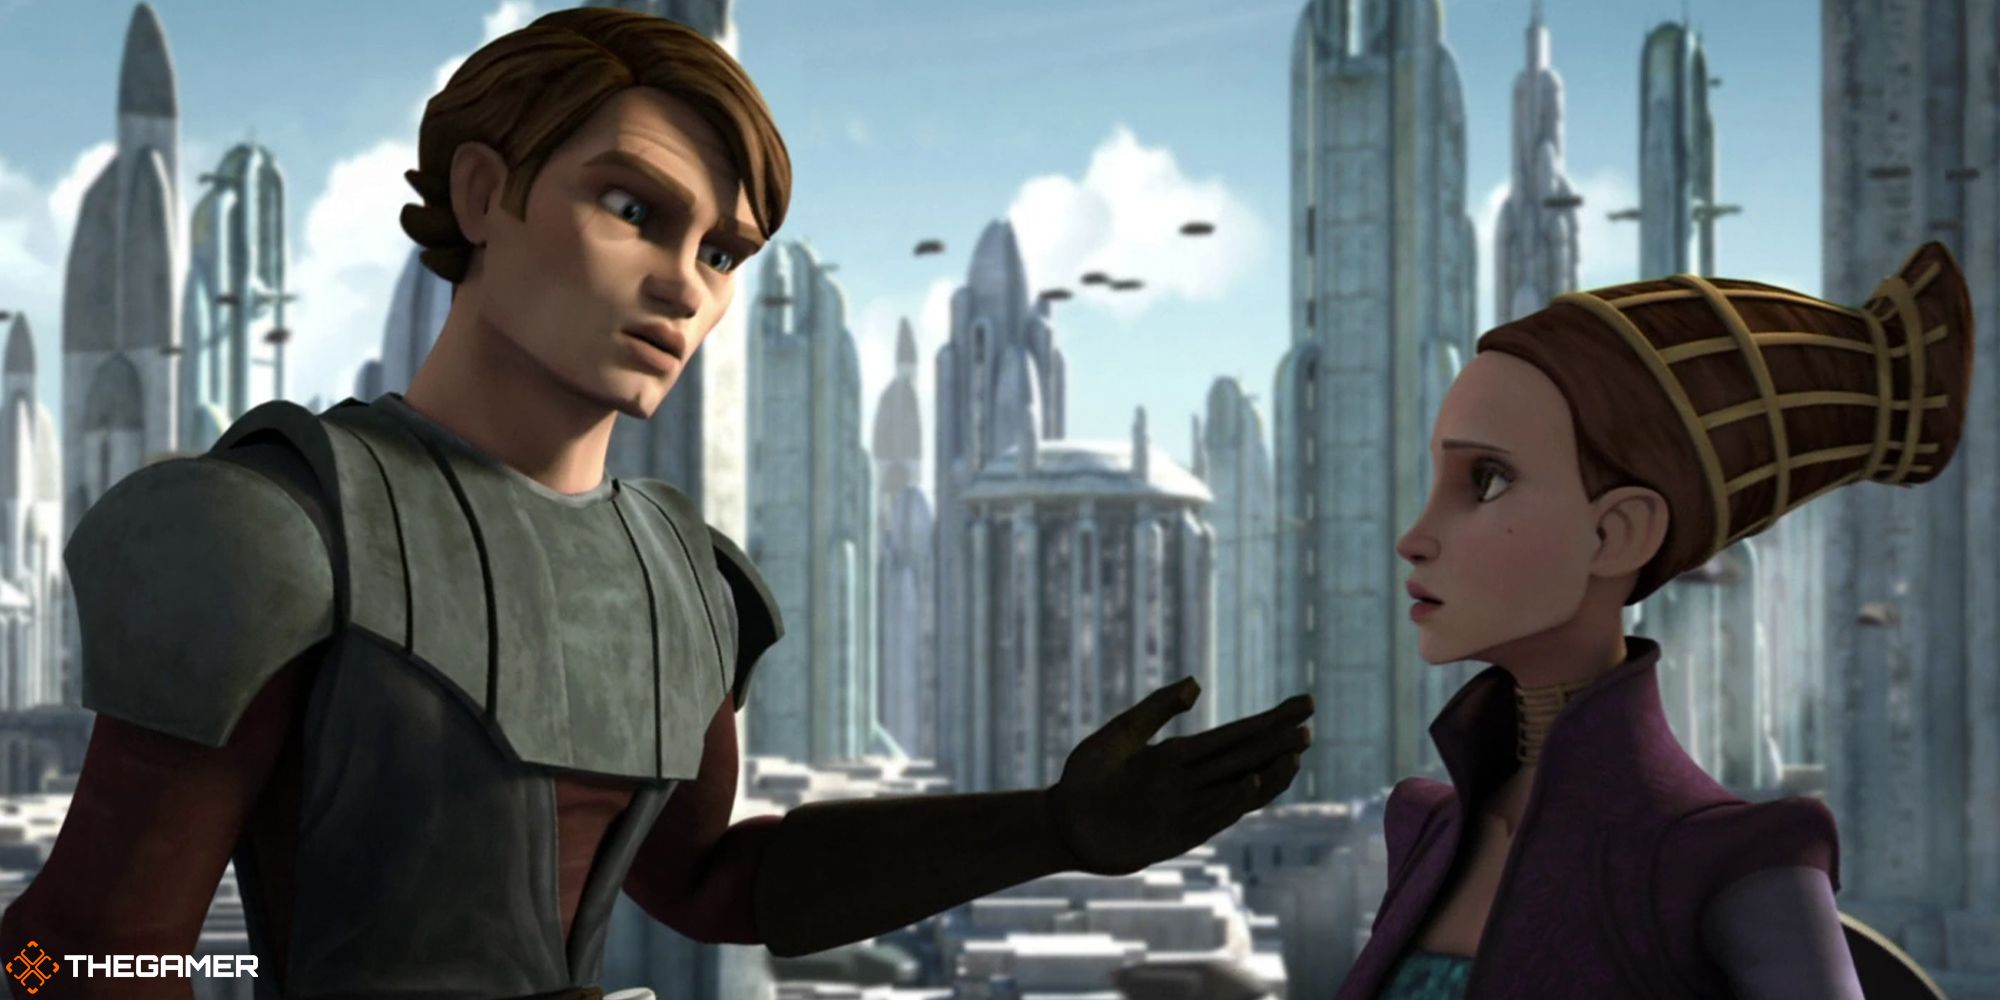 Star Wars The Clone Wars - Padme and Anakin talk